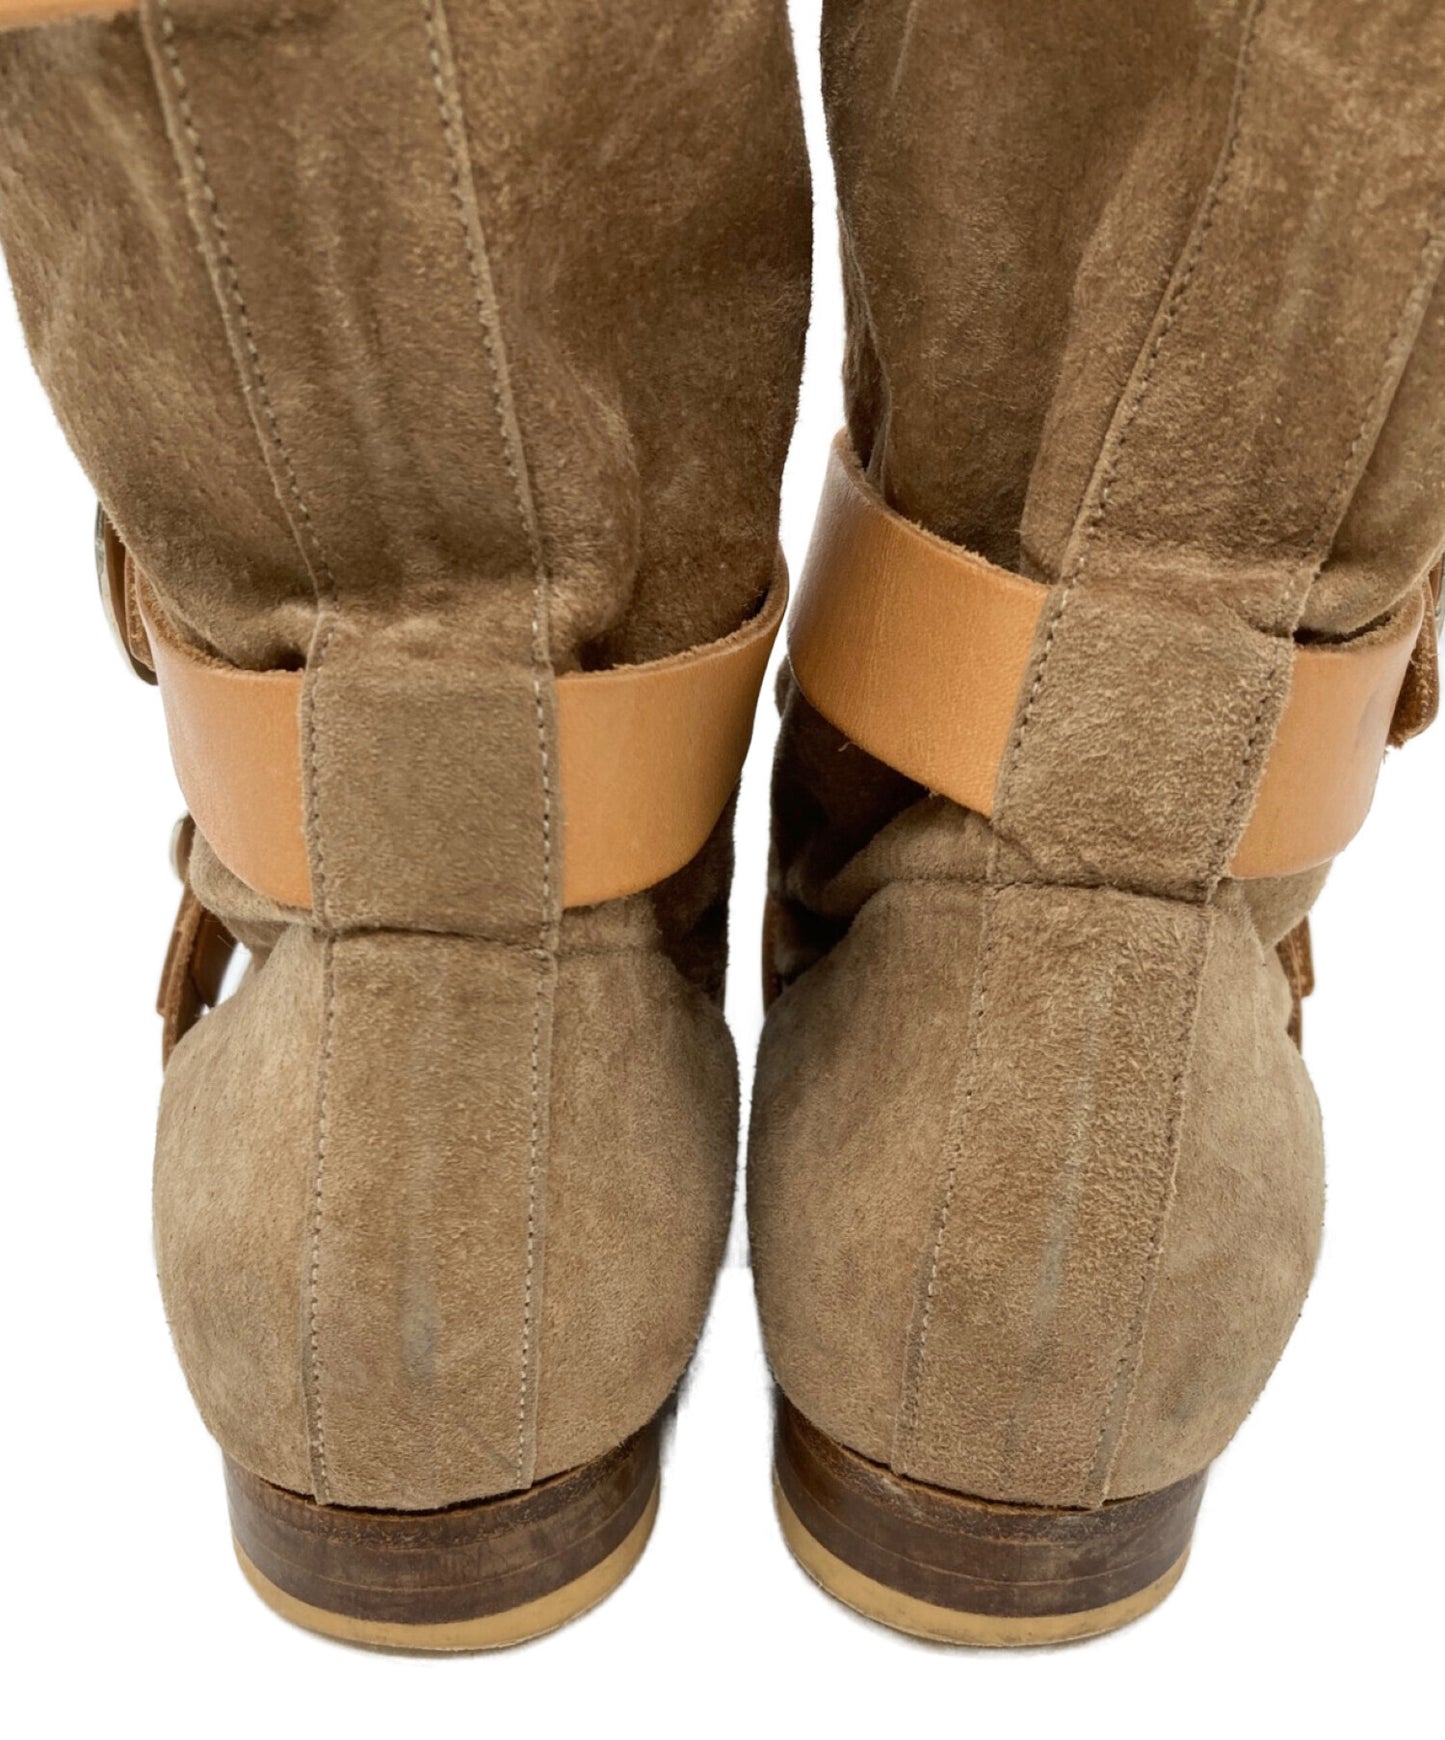 Vivienne Westwood海盗靴子 /长靴 /靴子